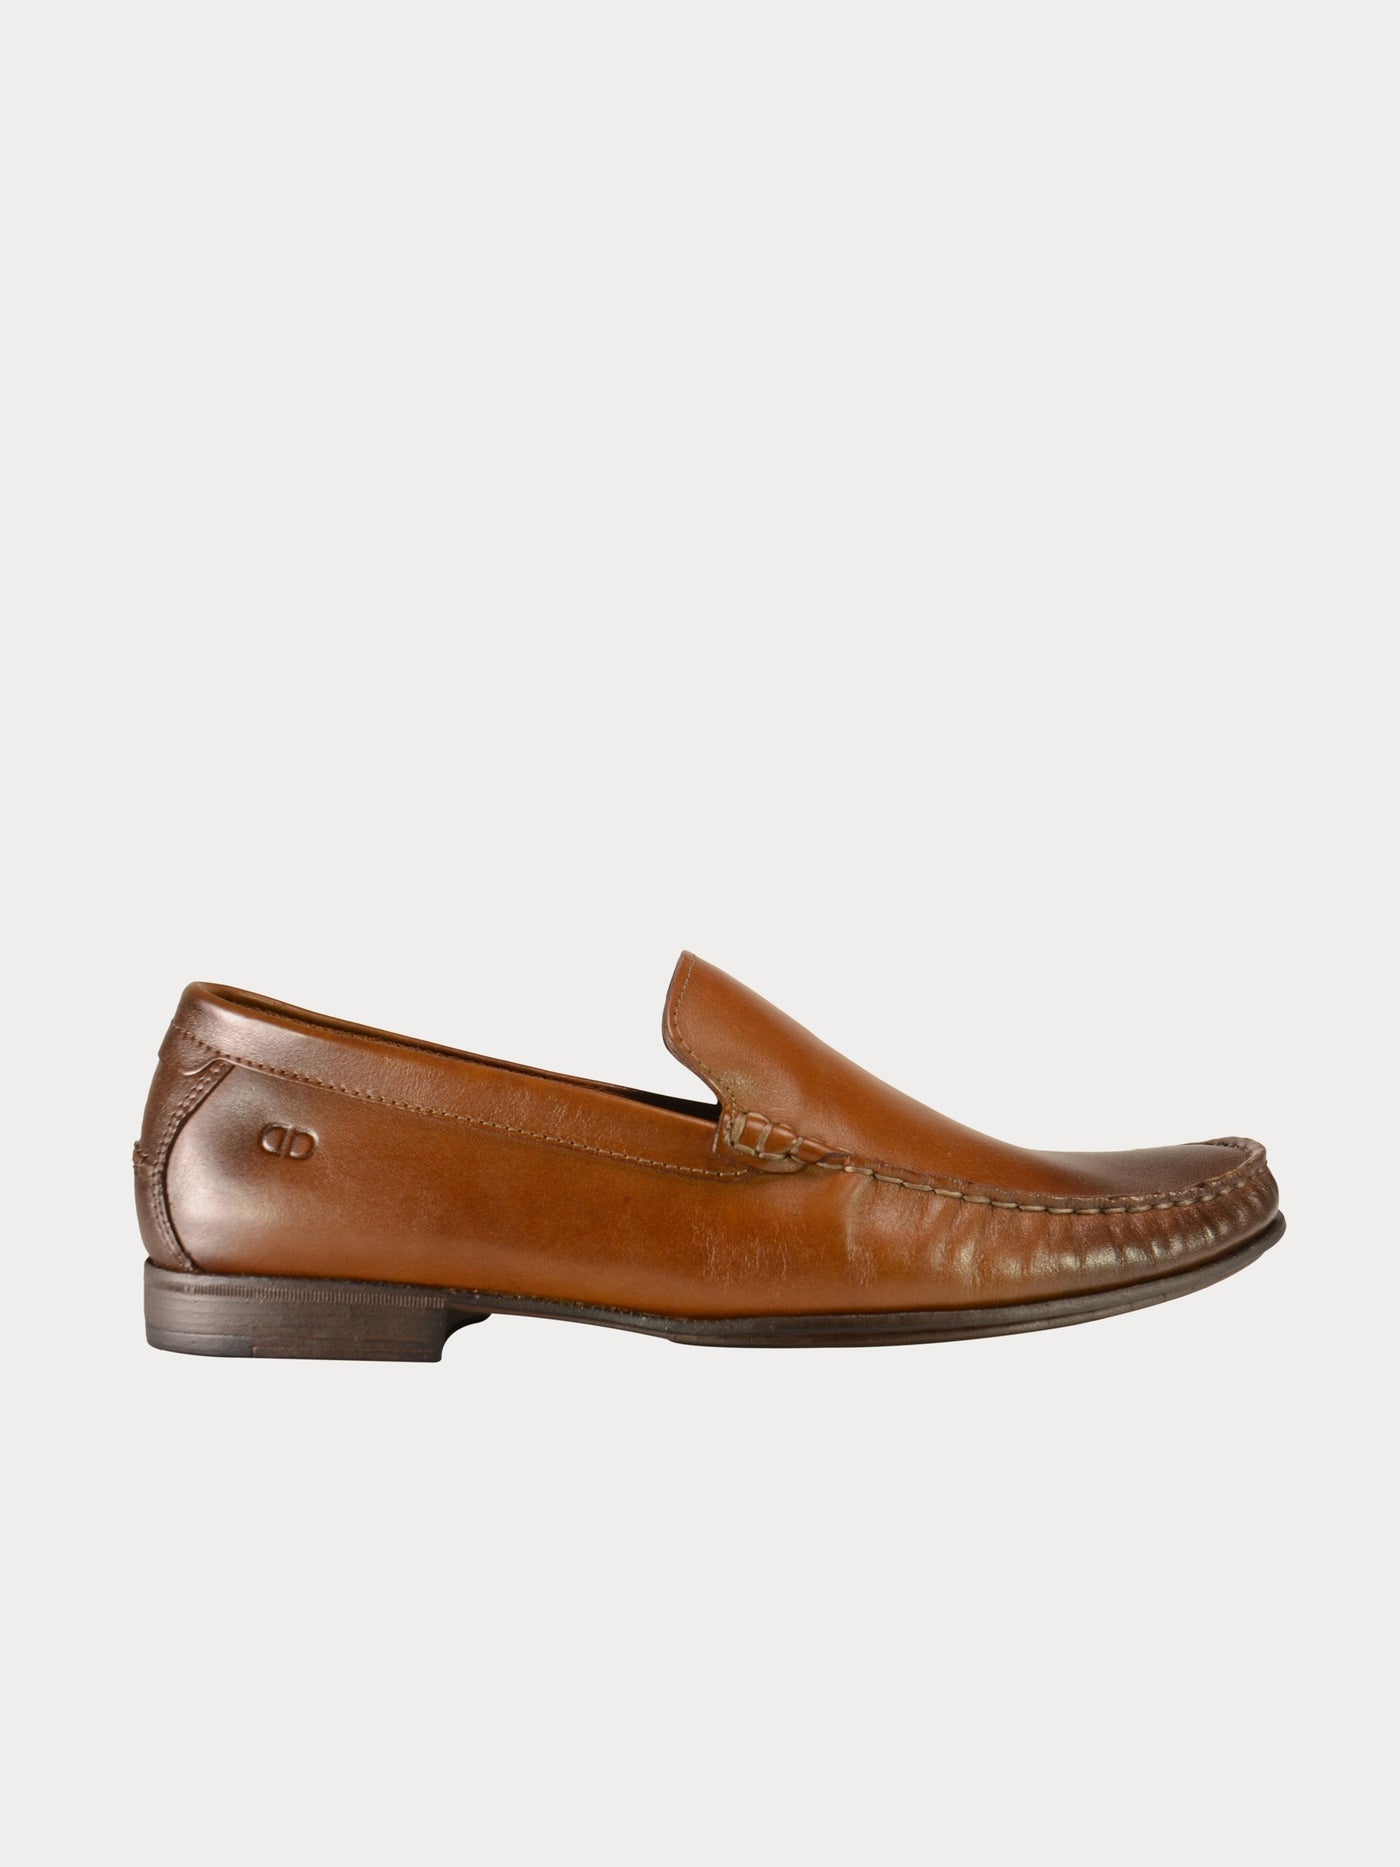 Democrata Cruiser Men's Formal Leather Shoes